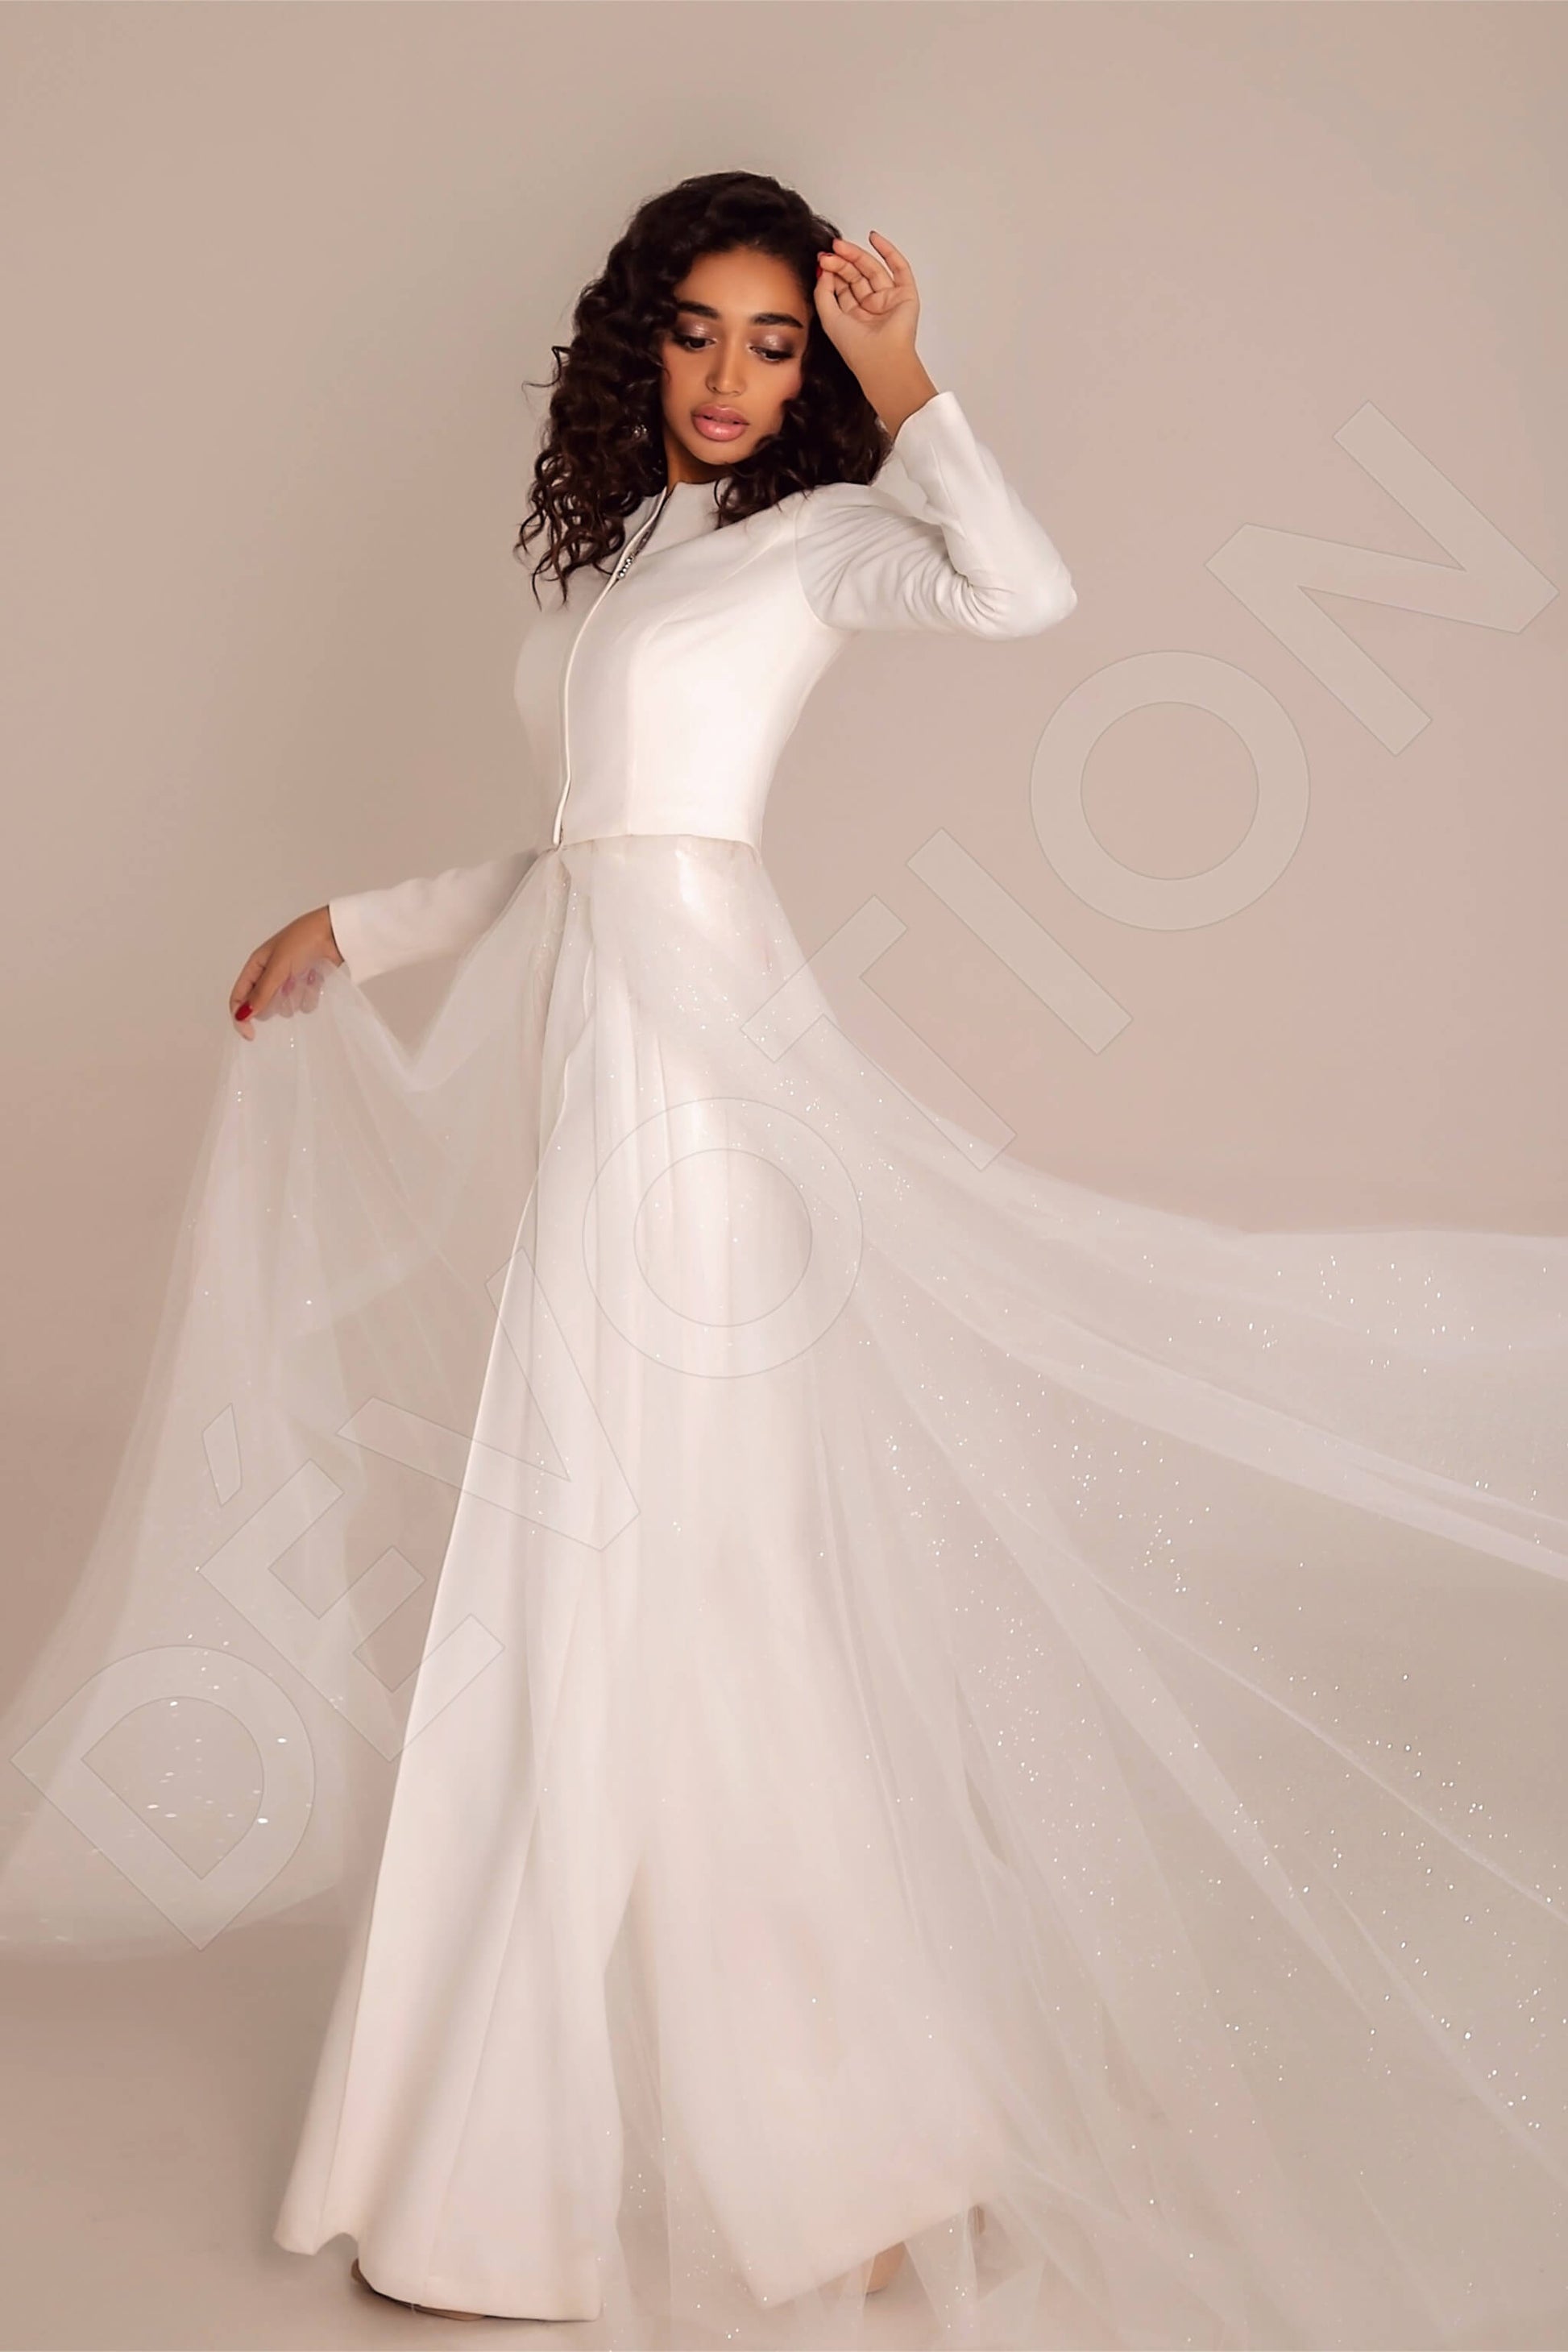 Nailah Pants Jewel Ivory Wedding dress